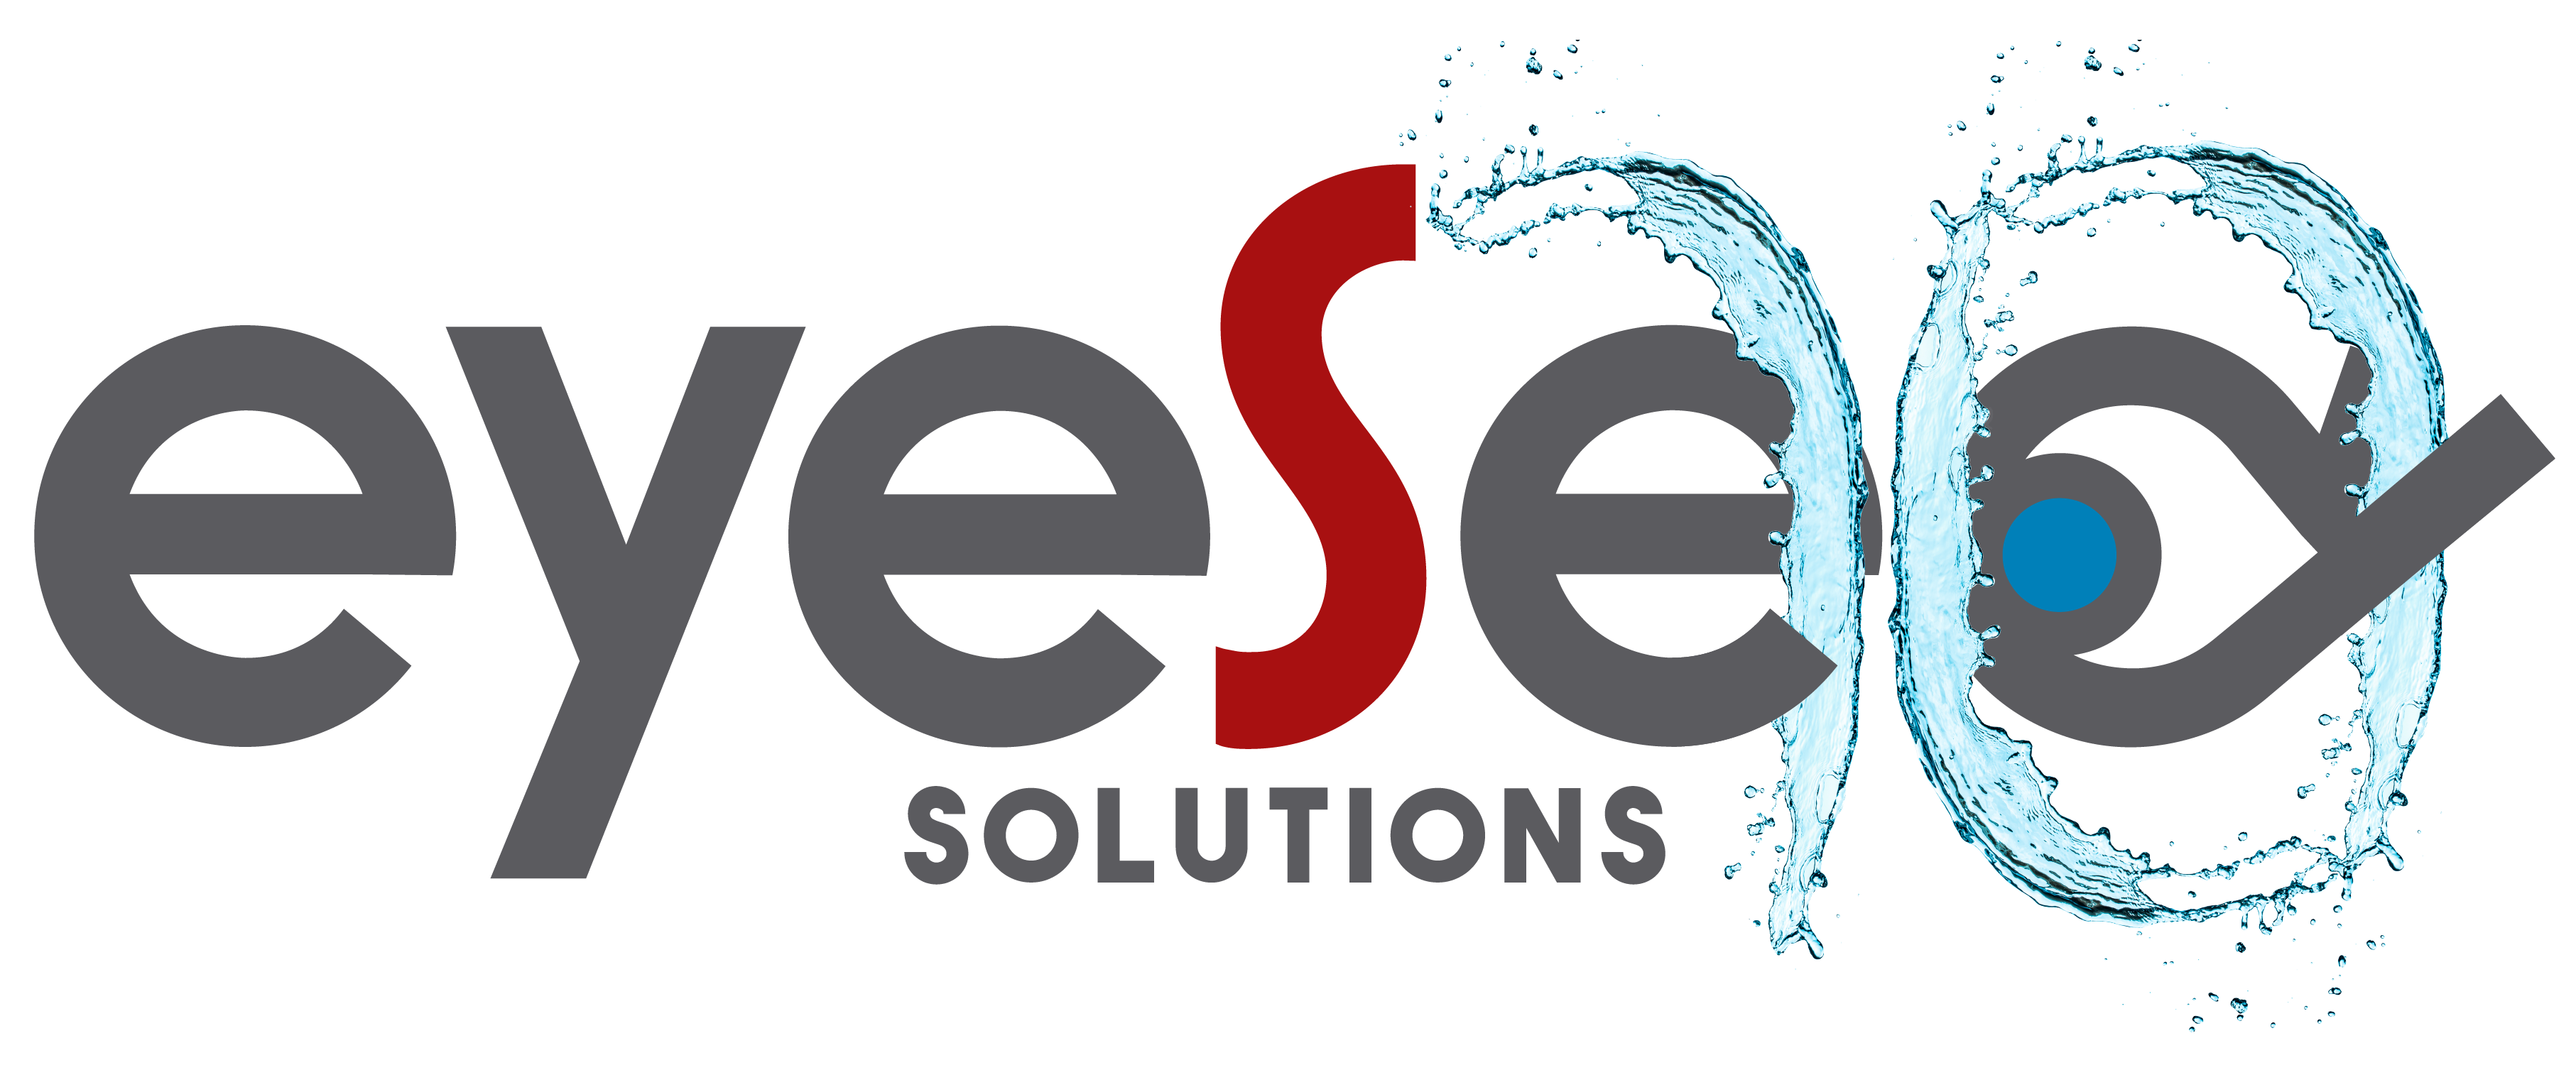 EyeSea Solutions